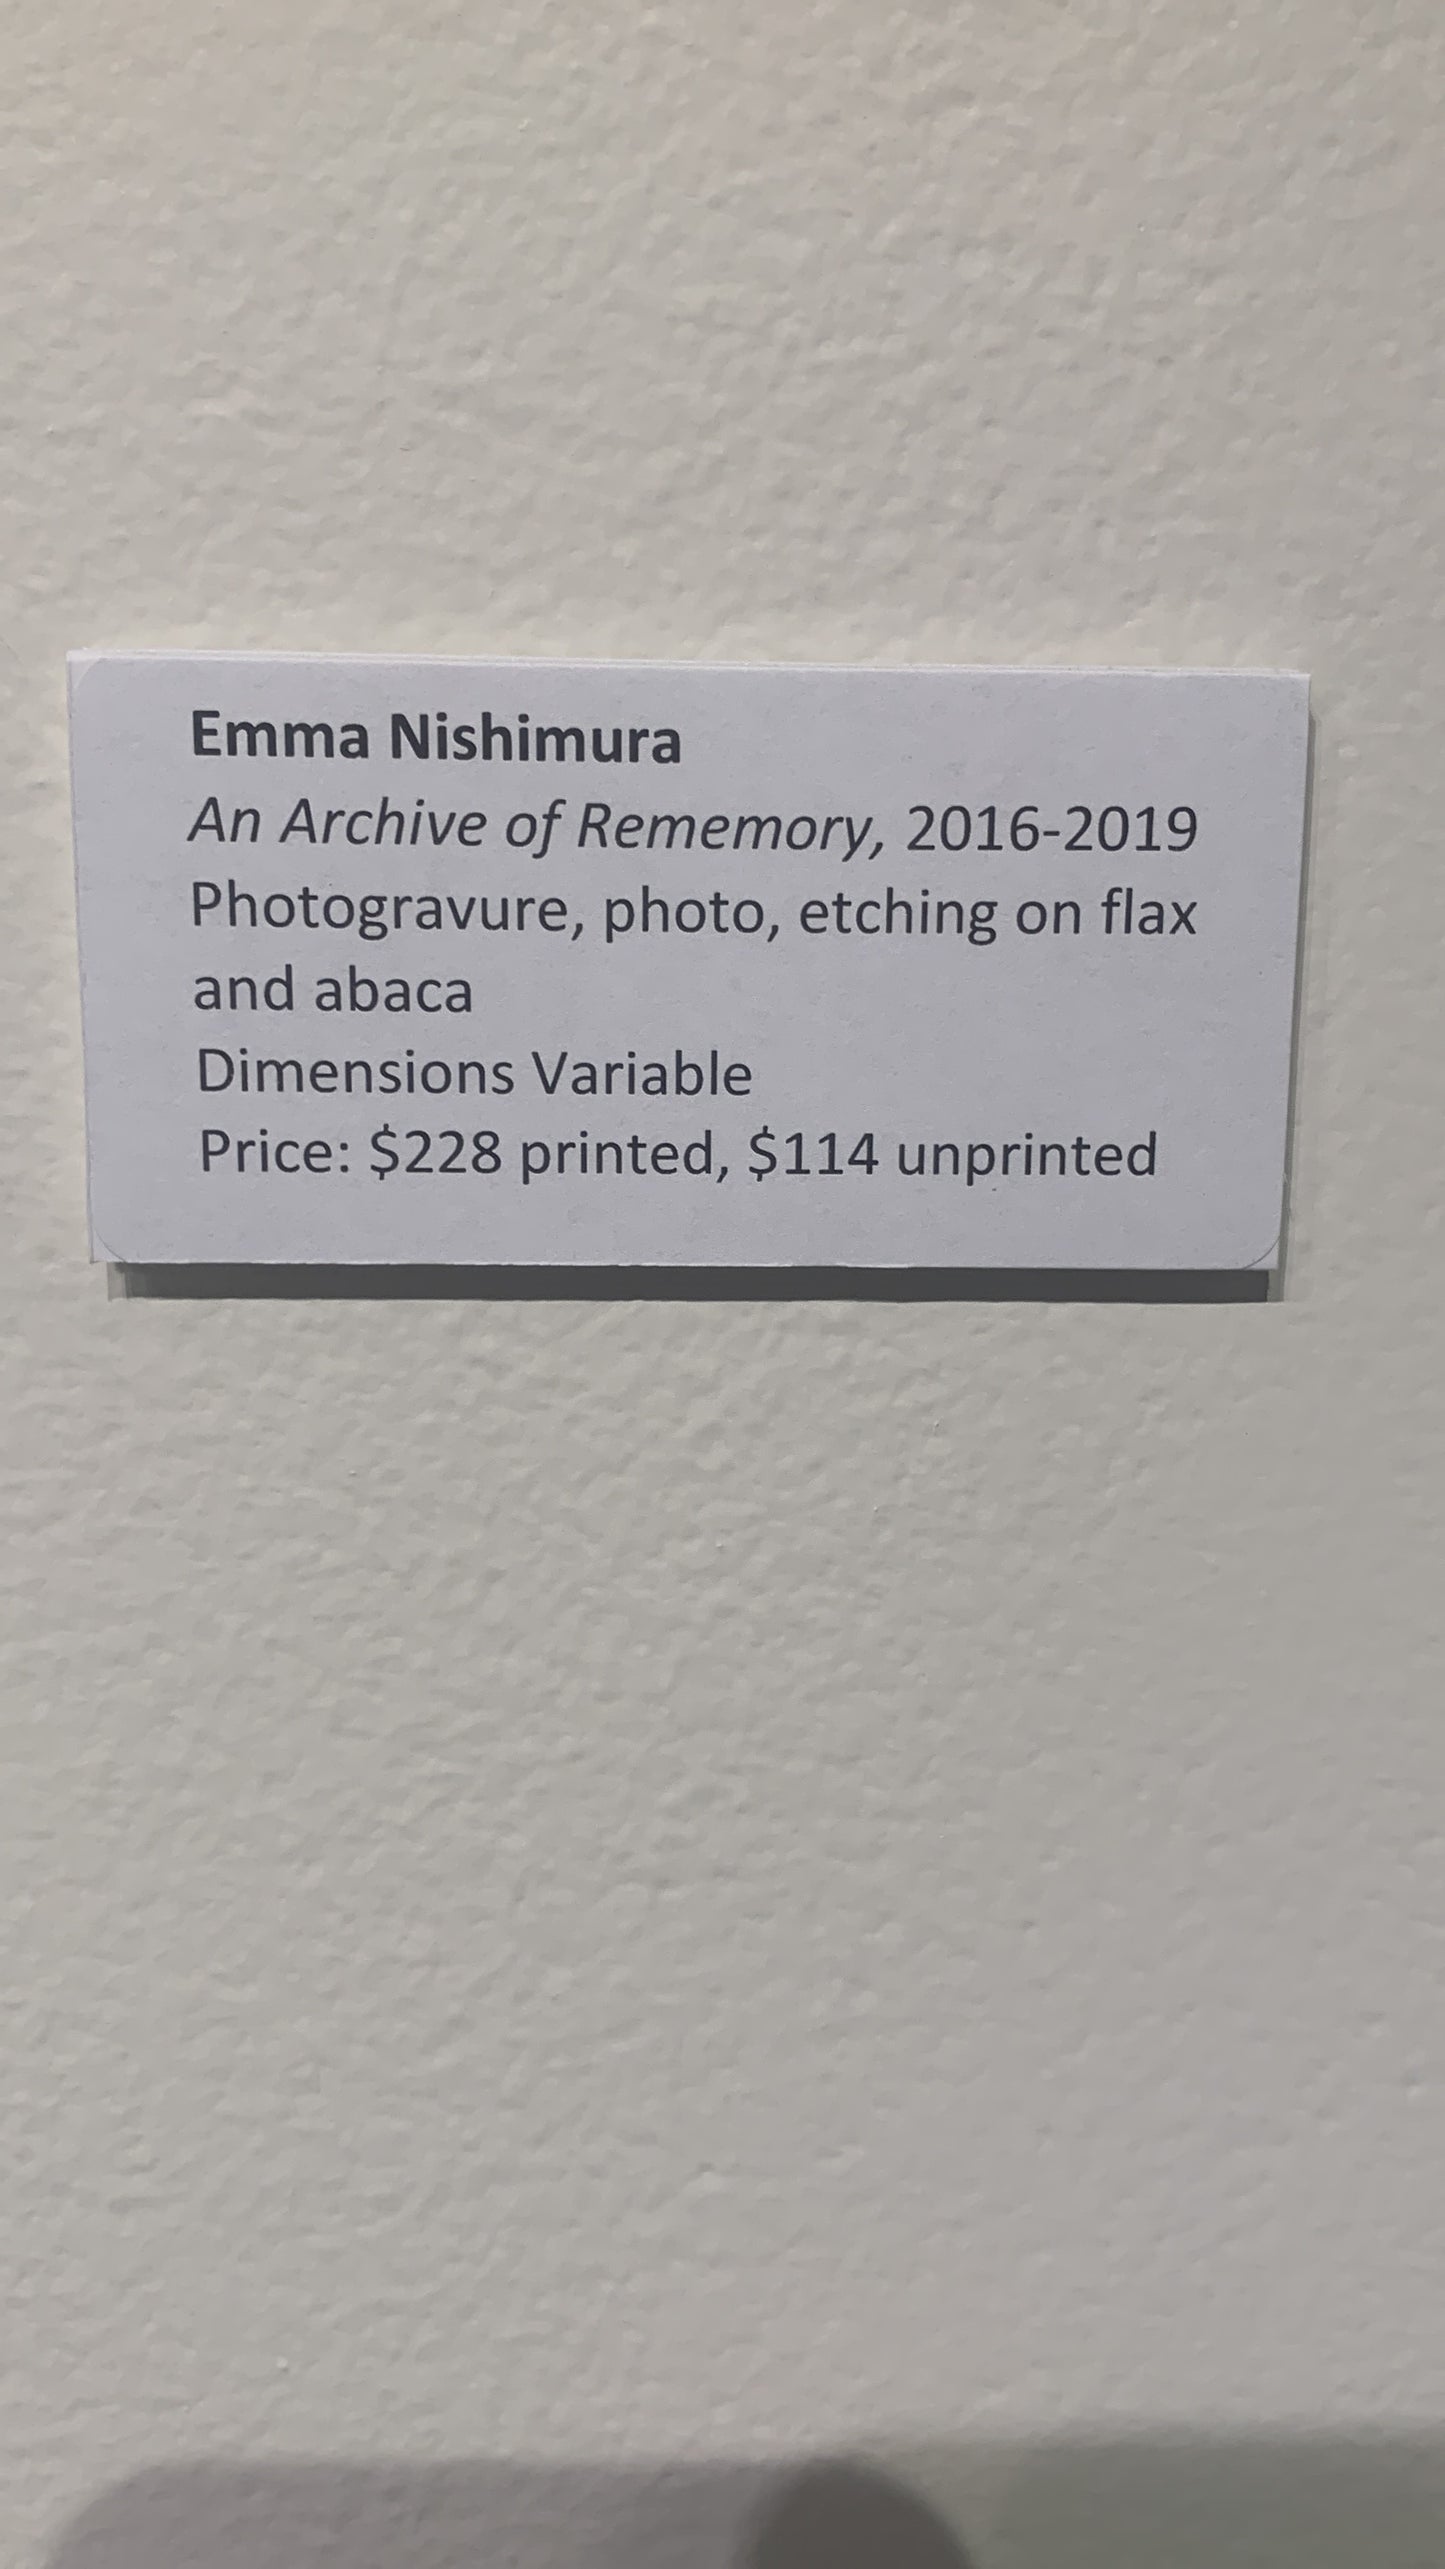 EMMA NISHIMURA, An Archive of Rememory (printed bundles), 2016-2019